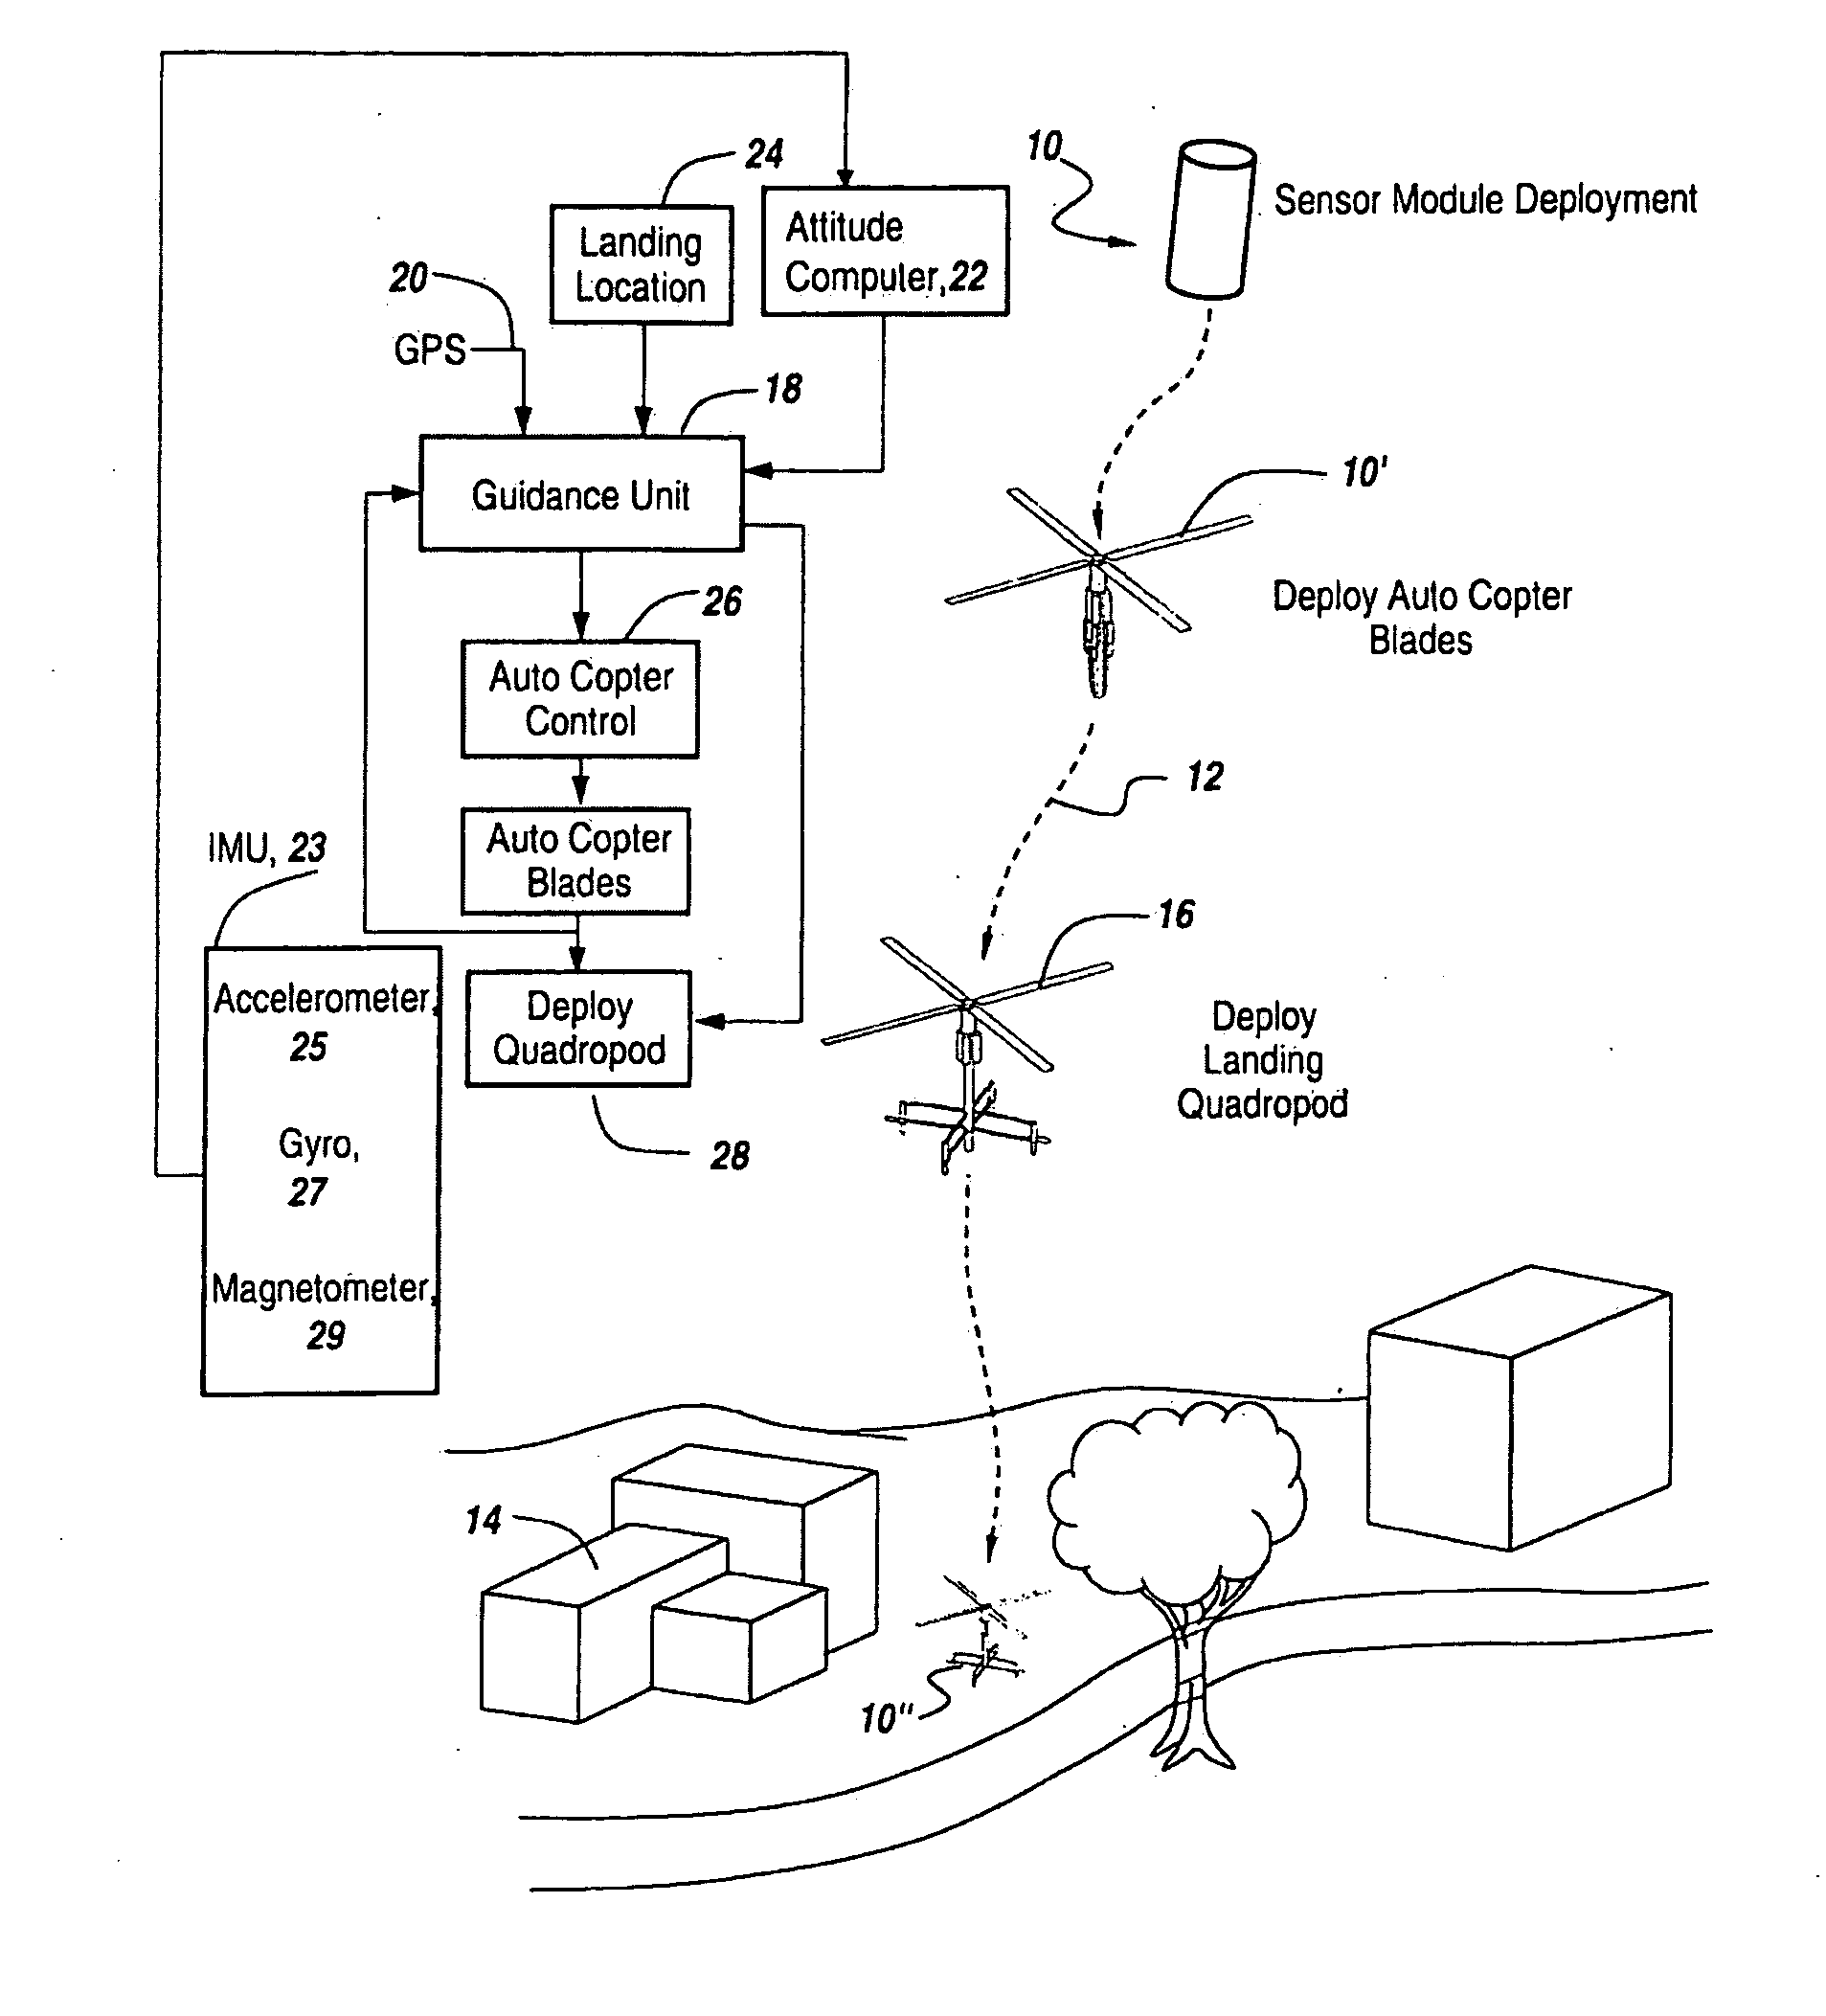 Covert sensor emplacement using autorotational delivery mechanism